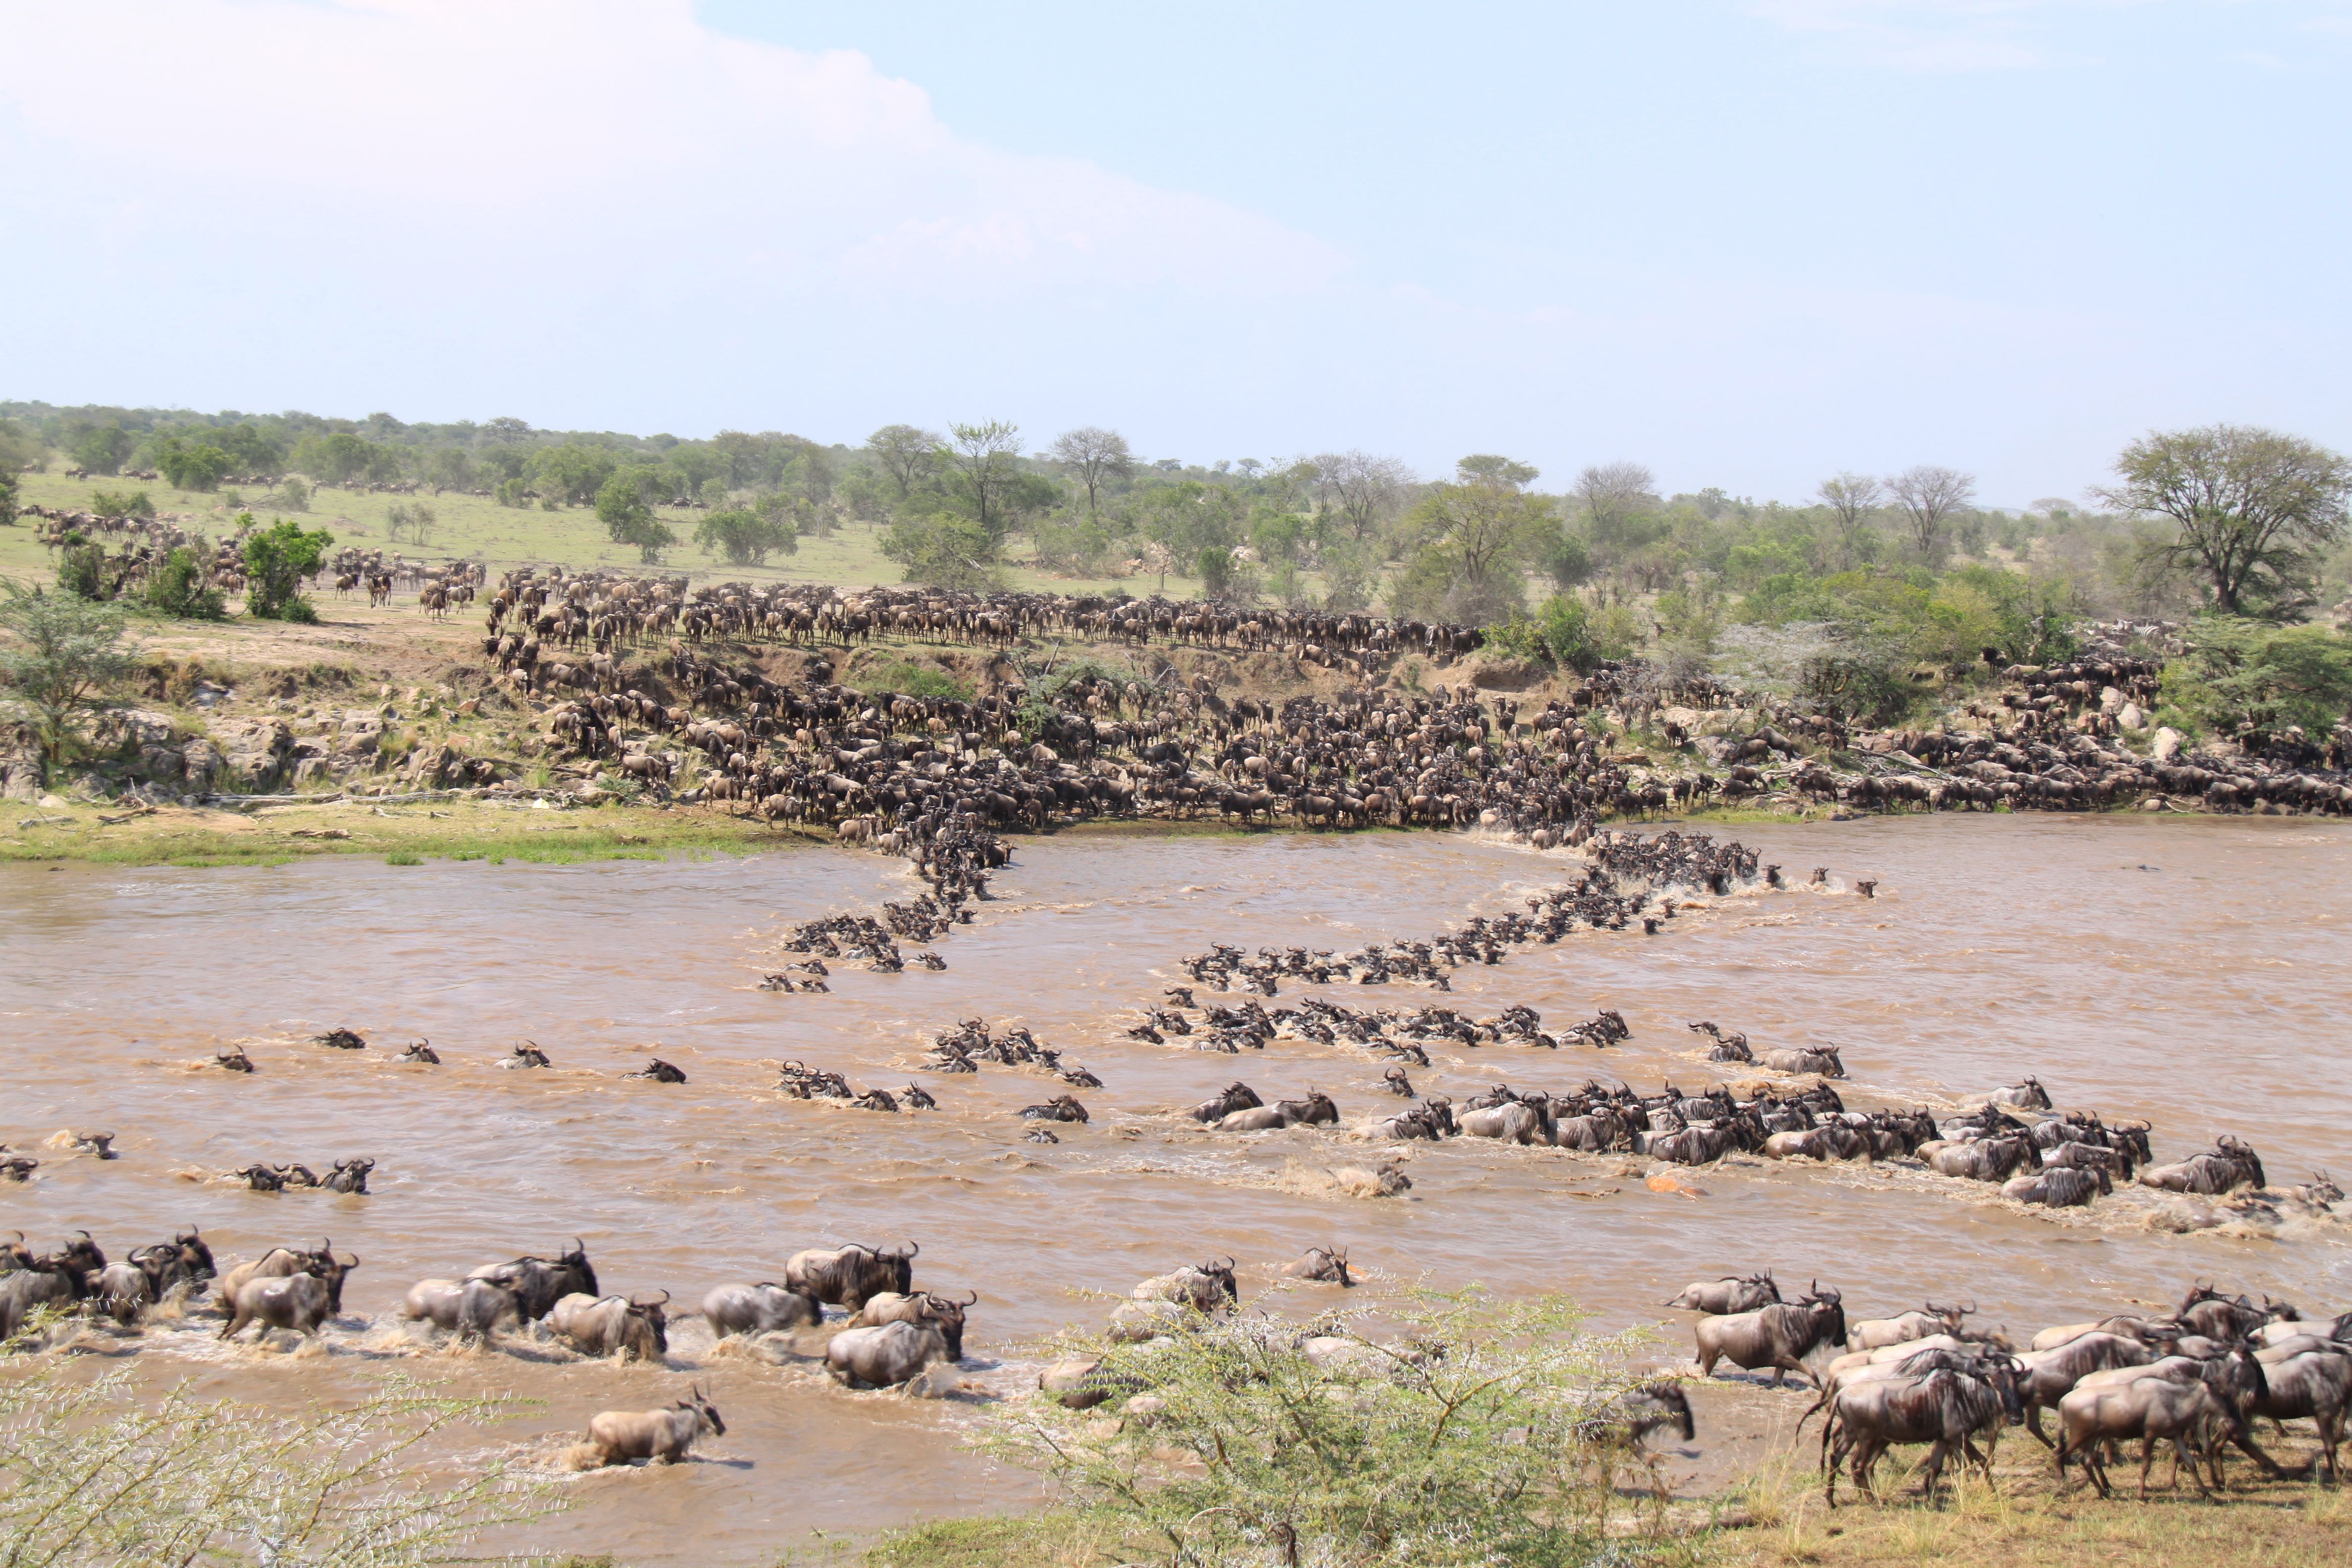 Crossing of Wildebeest in Serengeti National Park Tanzania